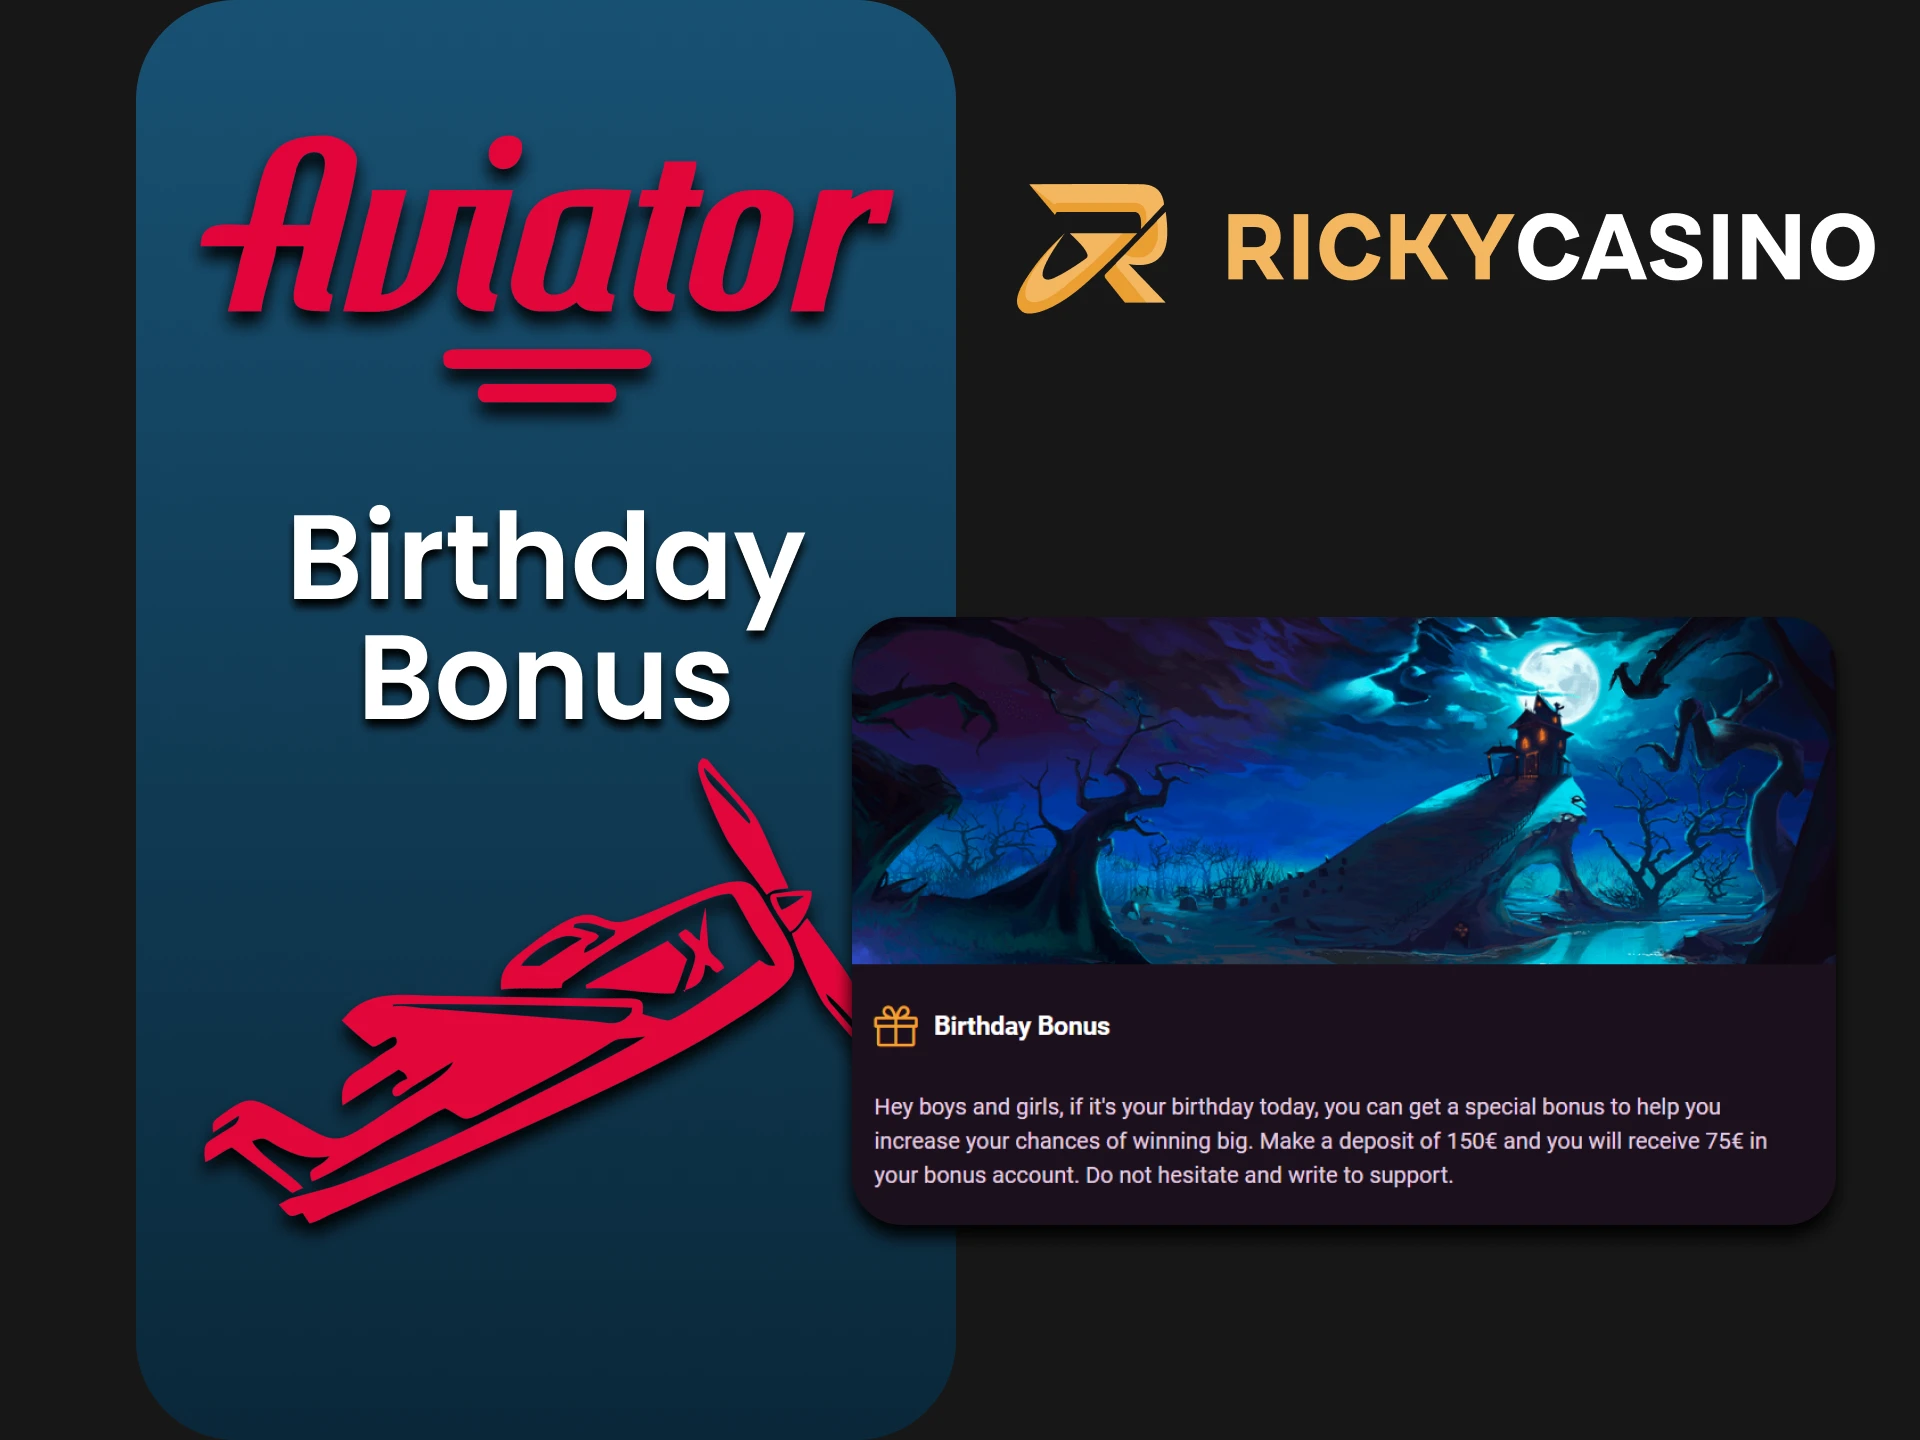 On your birthday you will receive an Aviator bonus from Ricky Casino.